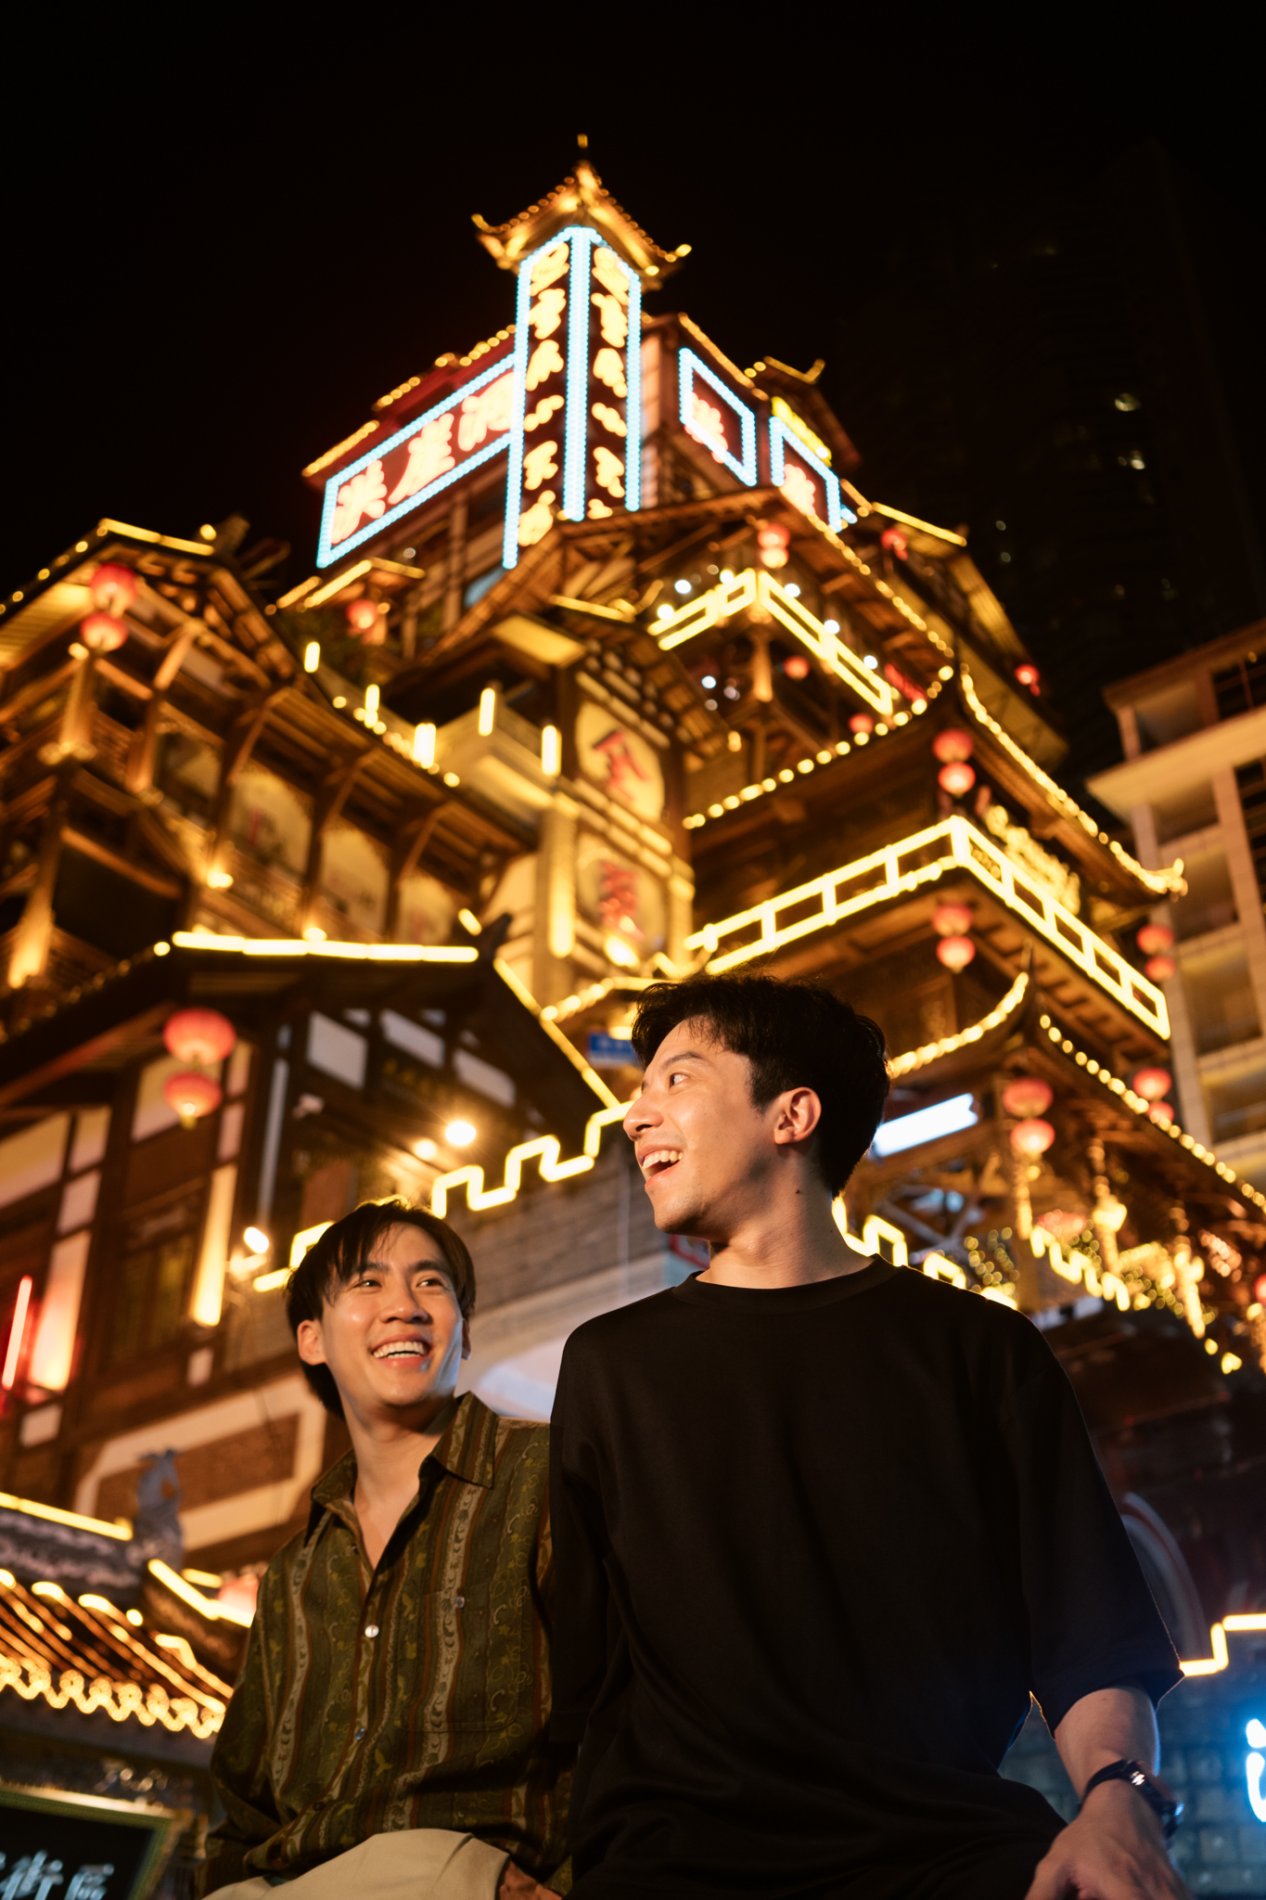 Revisit The Beautiful China &#8211; Chongqing